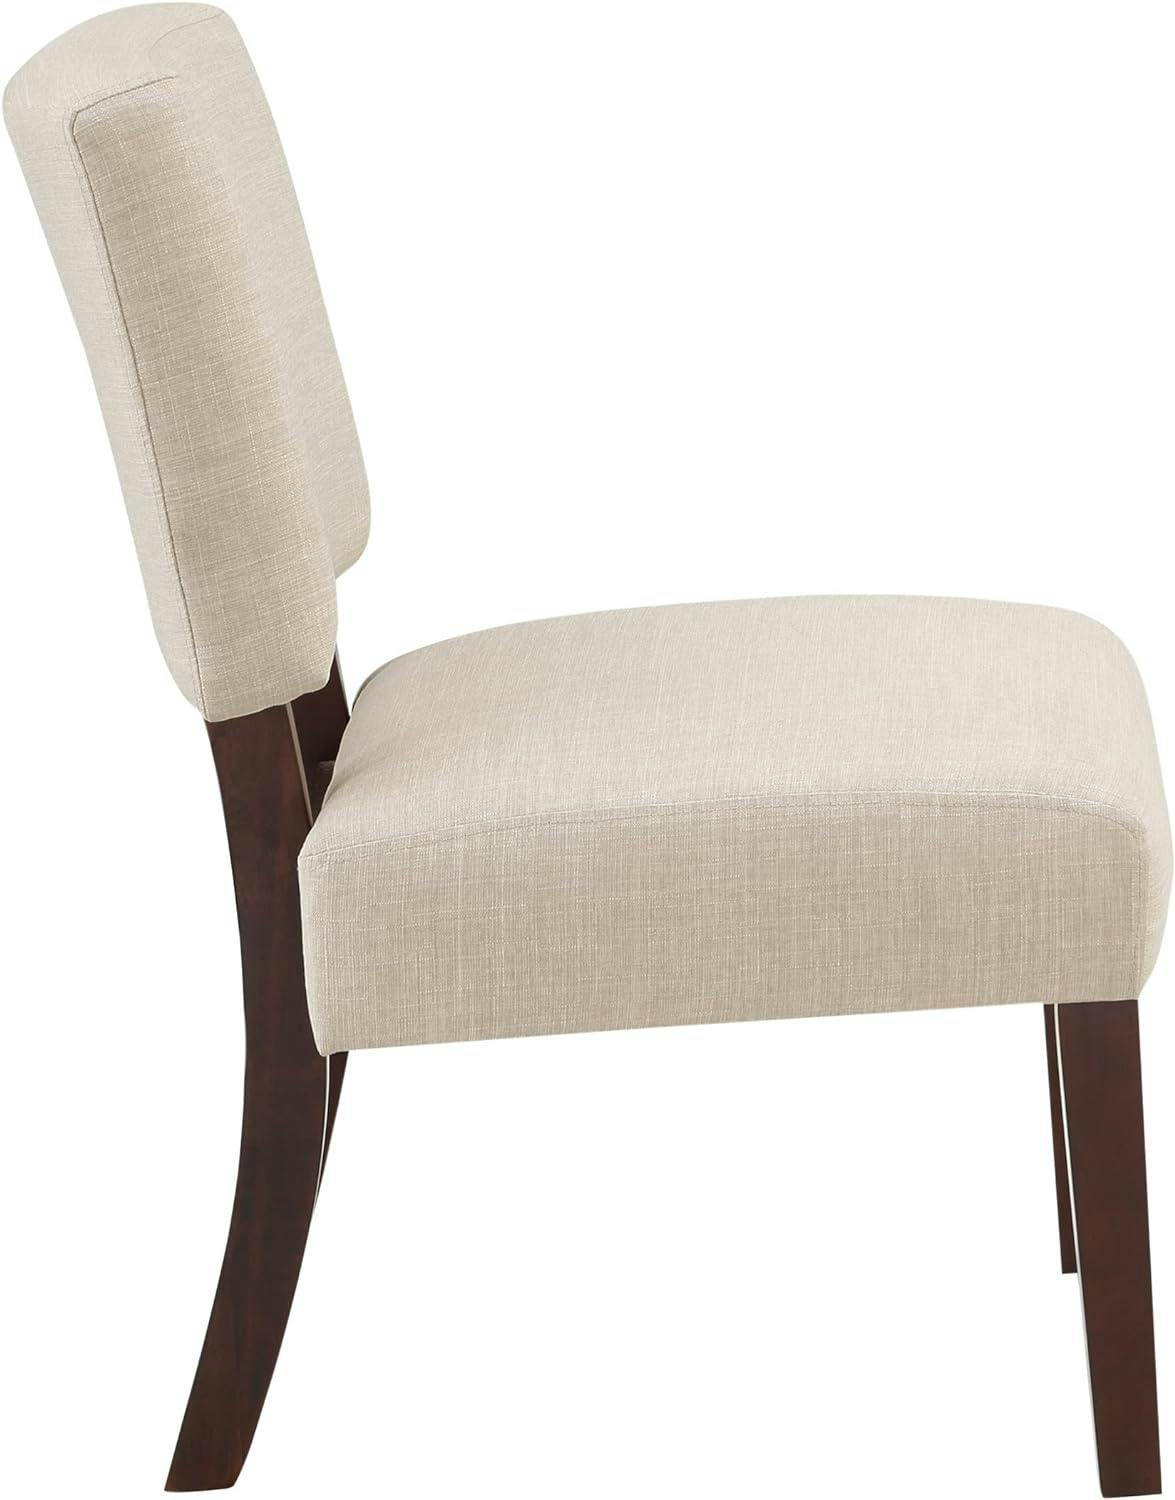 Jasmine Cream Fabric Side Chair with Espresso Wood Legs